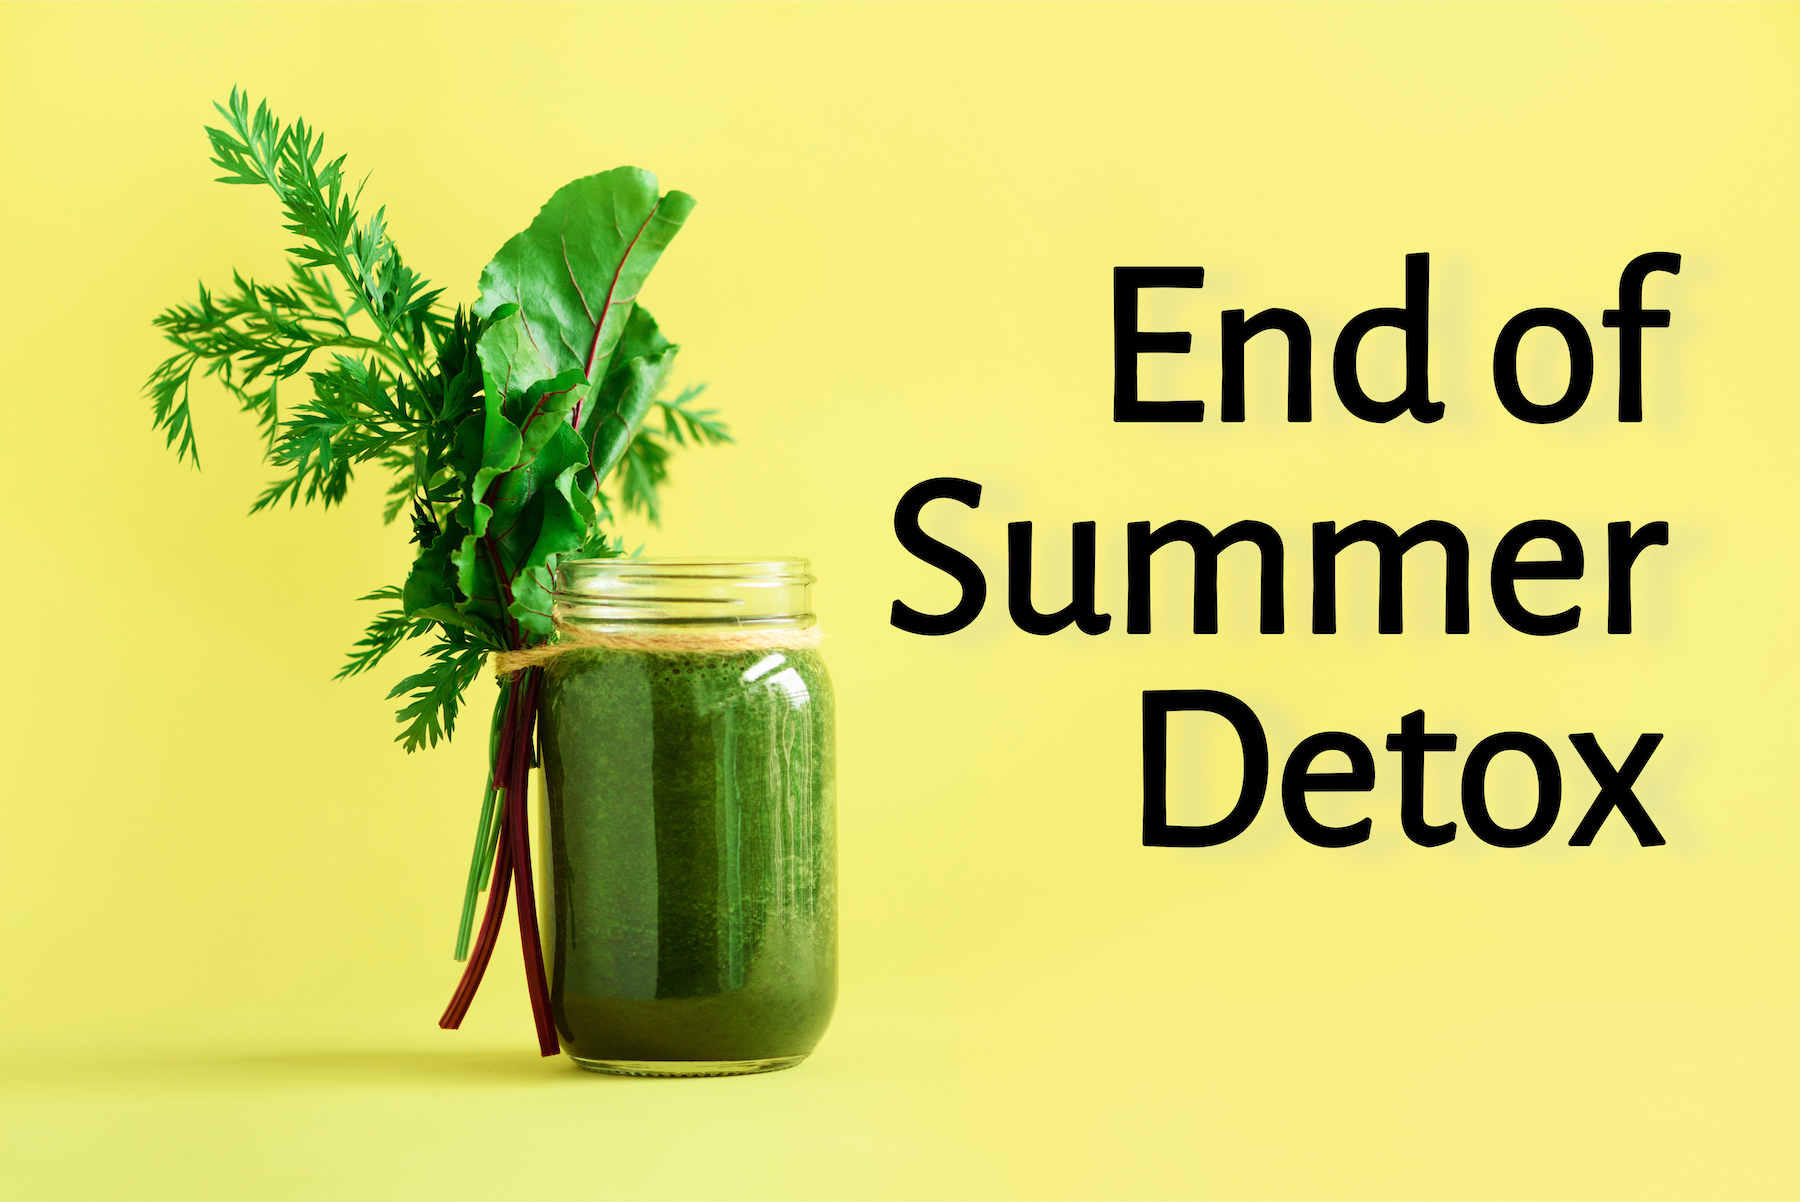 Post-summer detox diets